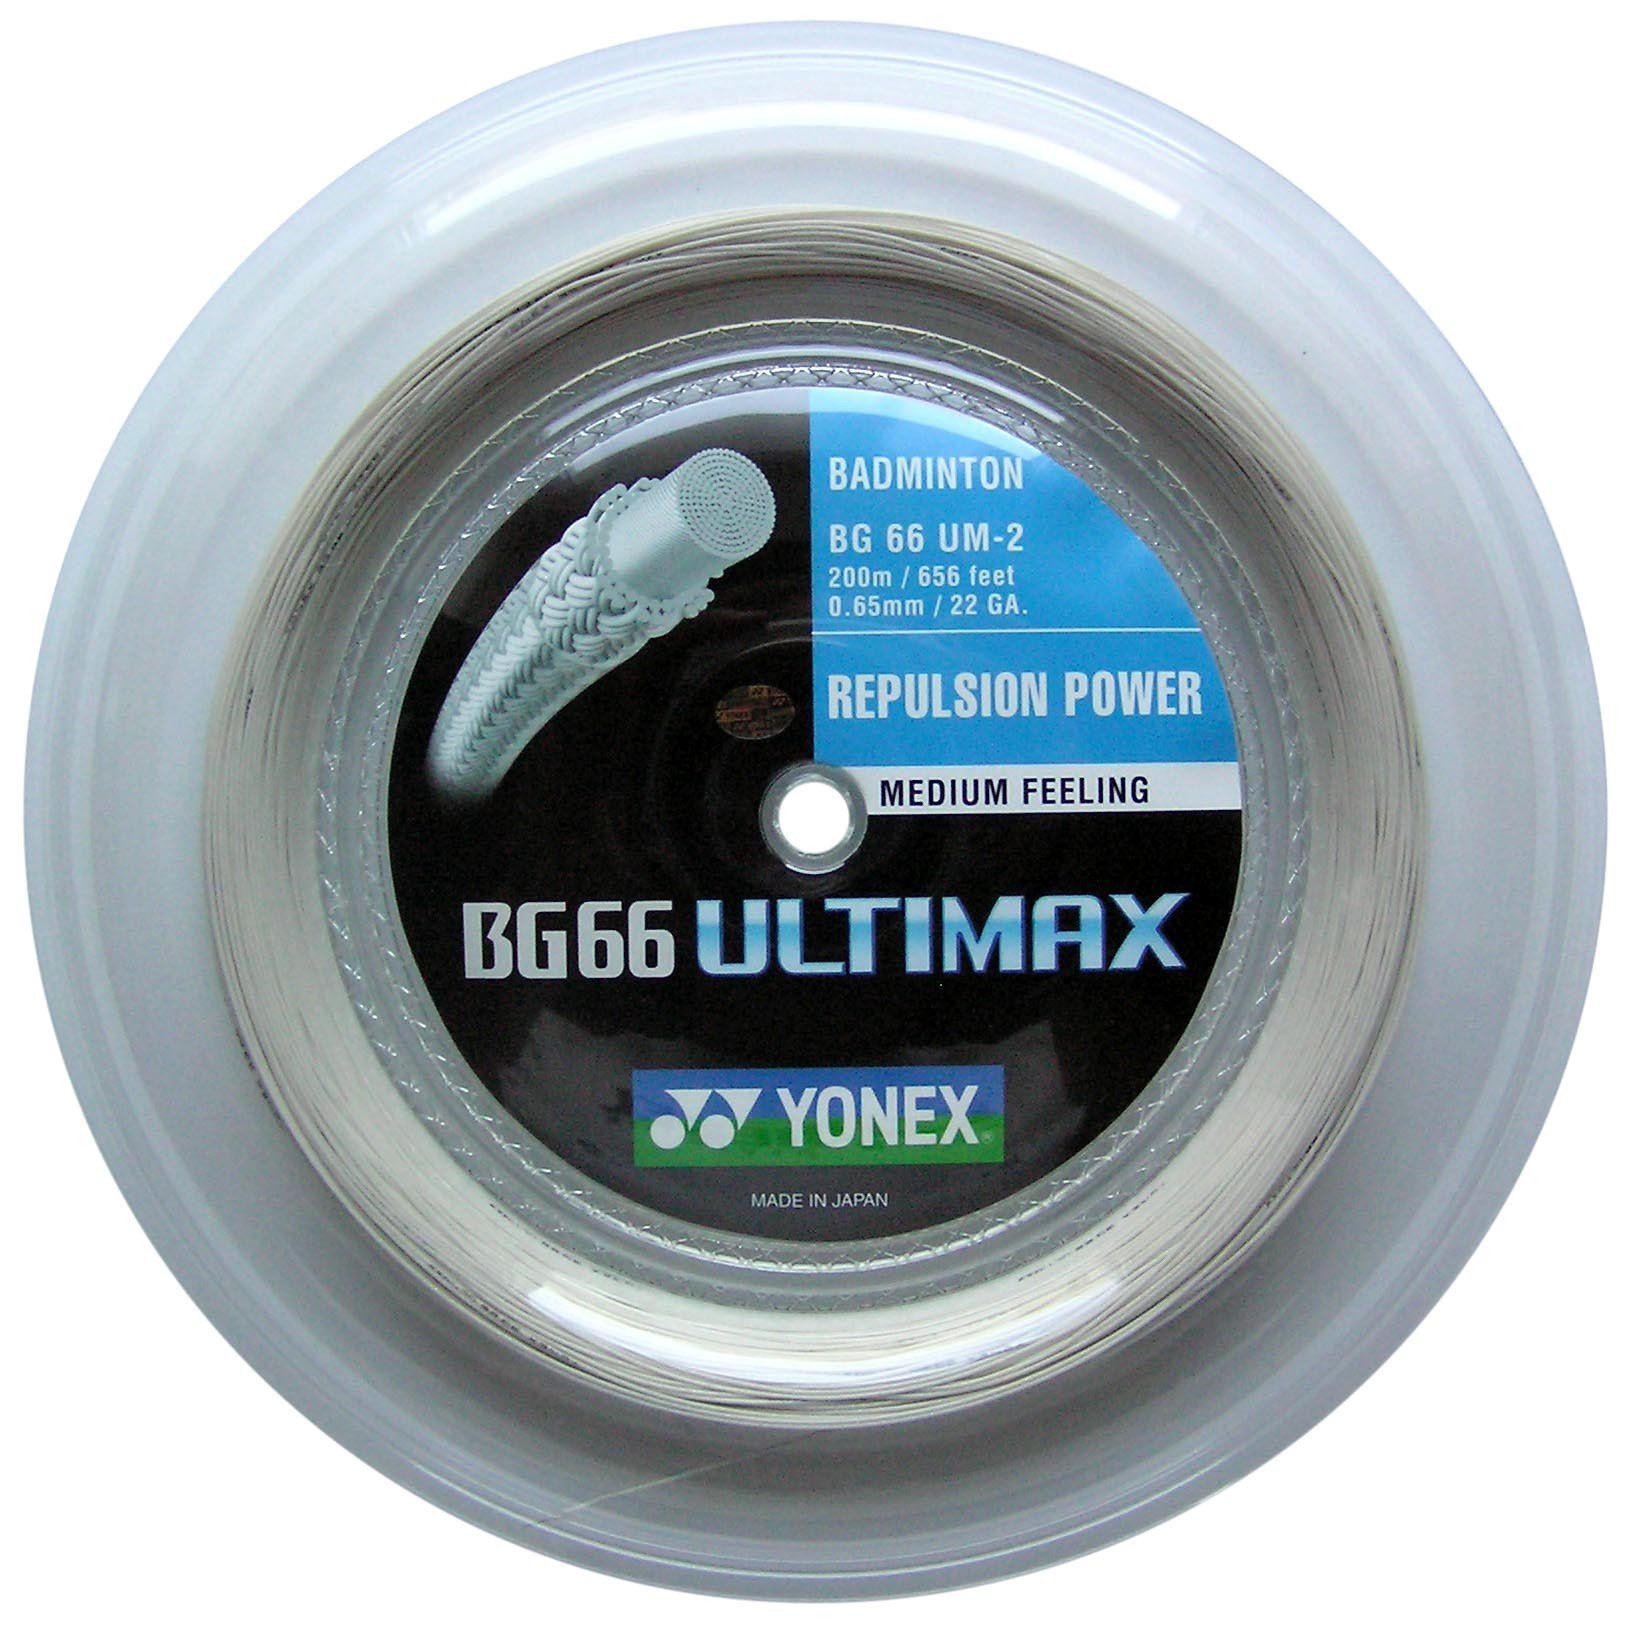 Yonex BG-66 ULTIMAX Badmintonstring Metalic White